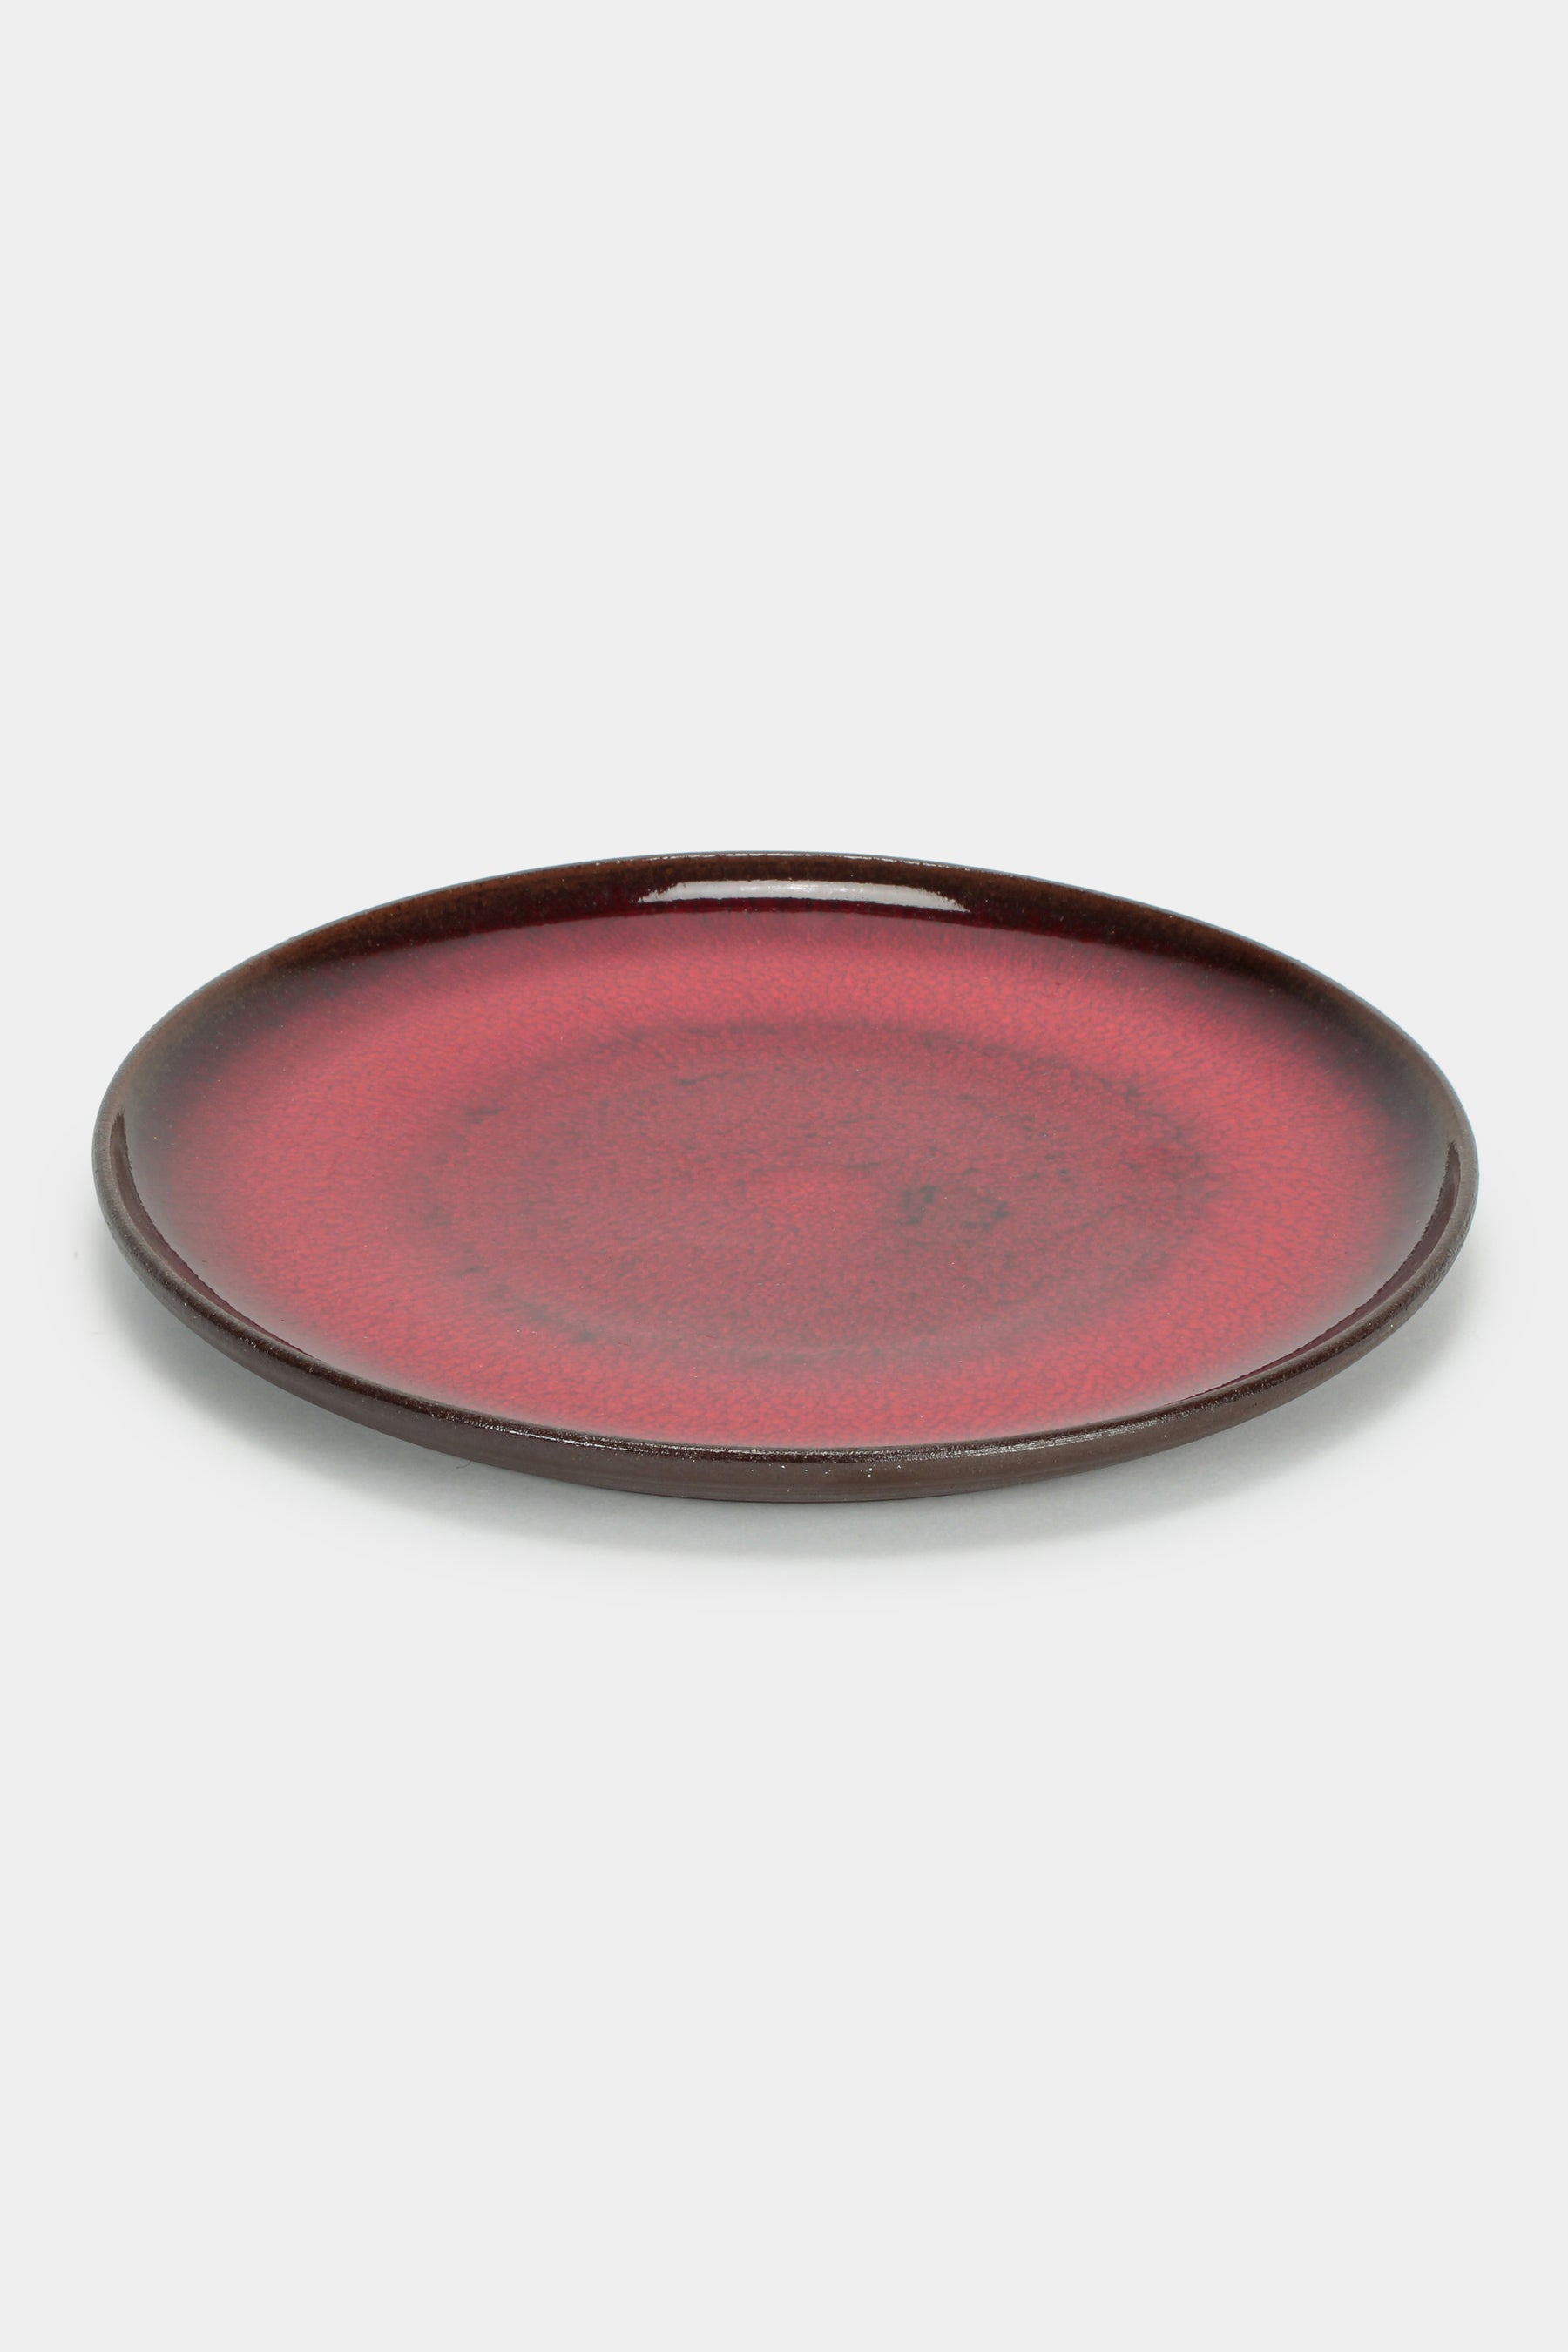 Ditlev clay plate Denmark 70s glazed